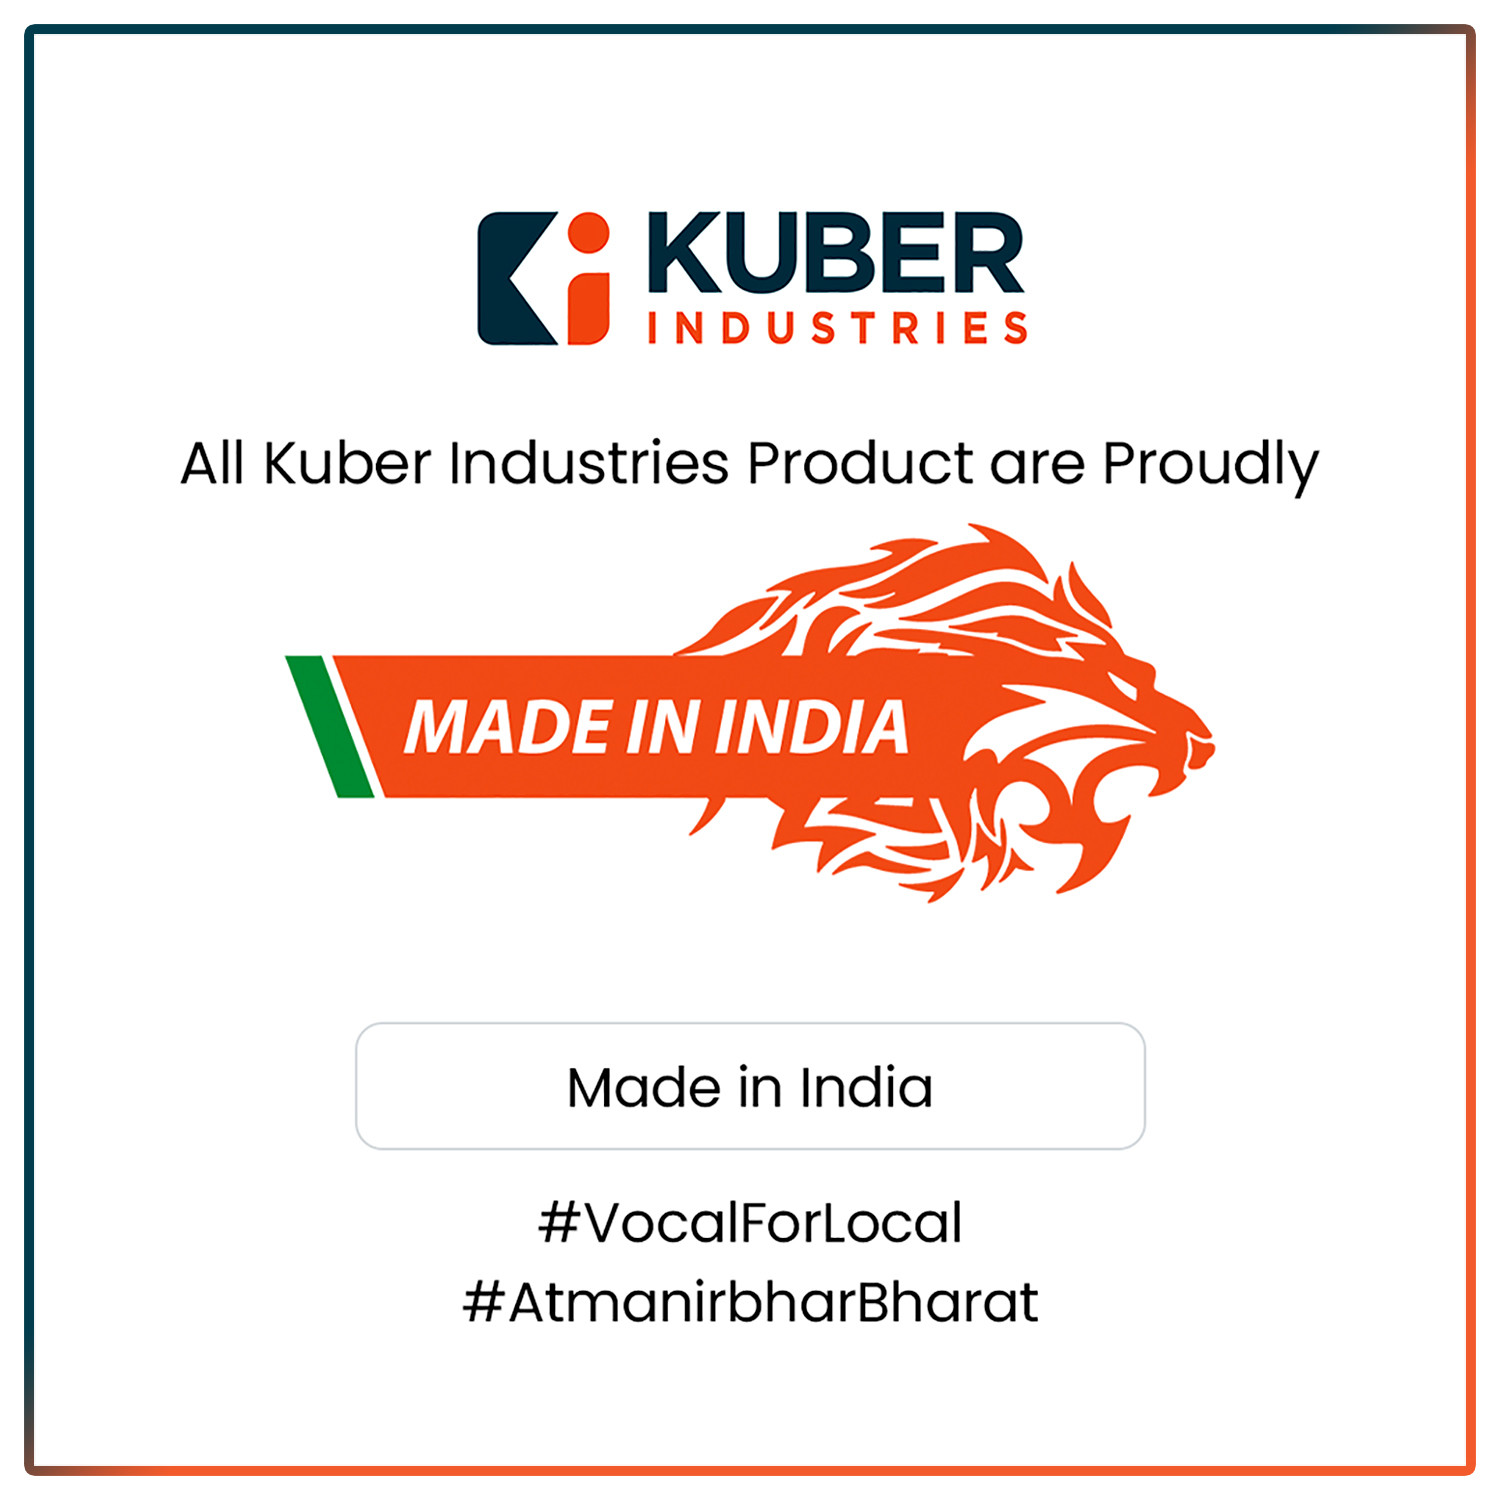 Kuber Industries Shelf Mat|Waterproof Strips Print PVC Anti-Slip Sheets|Durable Kitchen Cabinet Drawer Shelf Liner,5 Meter,(Gray)